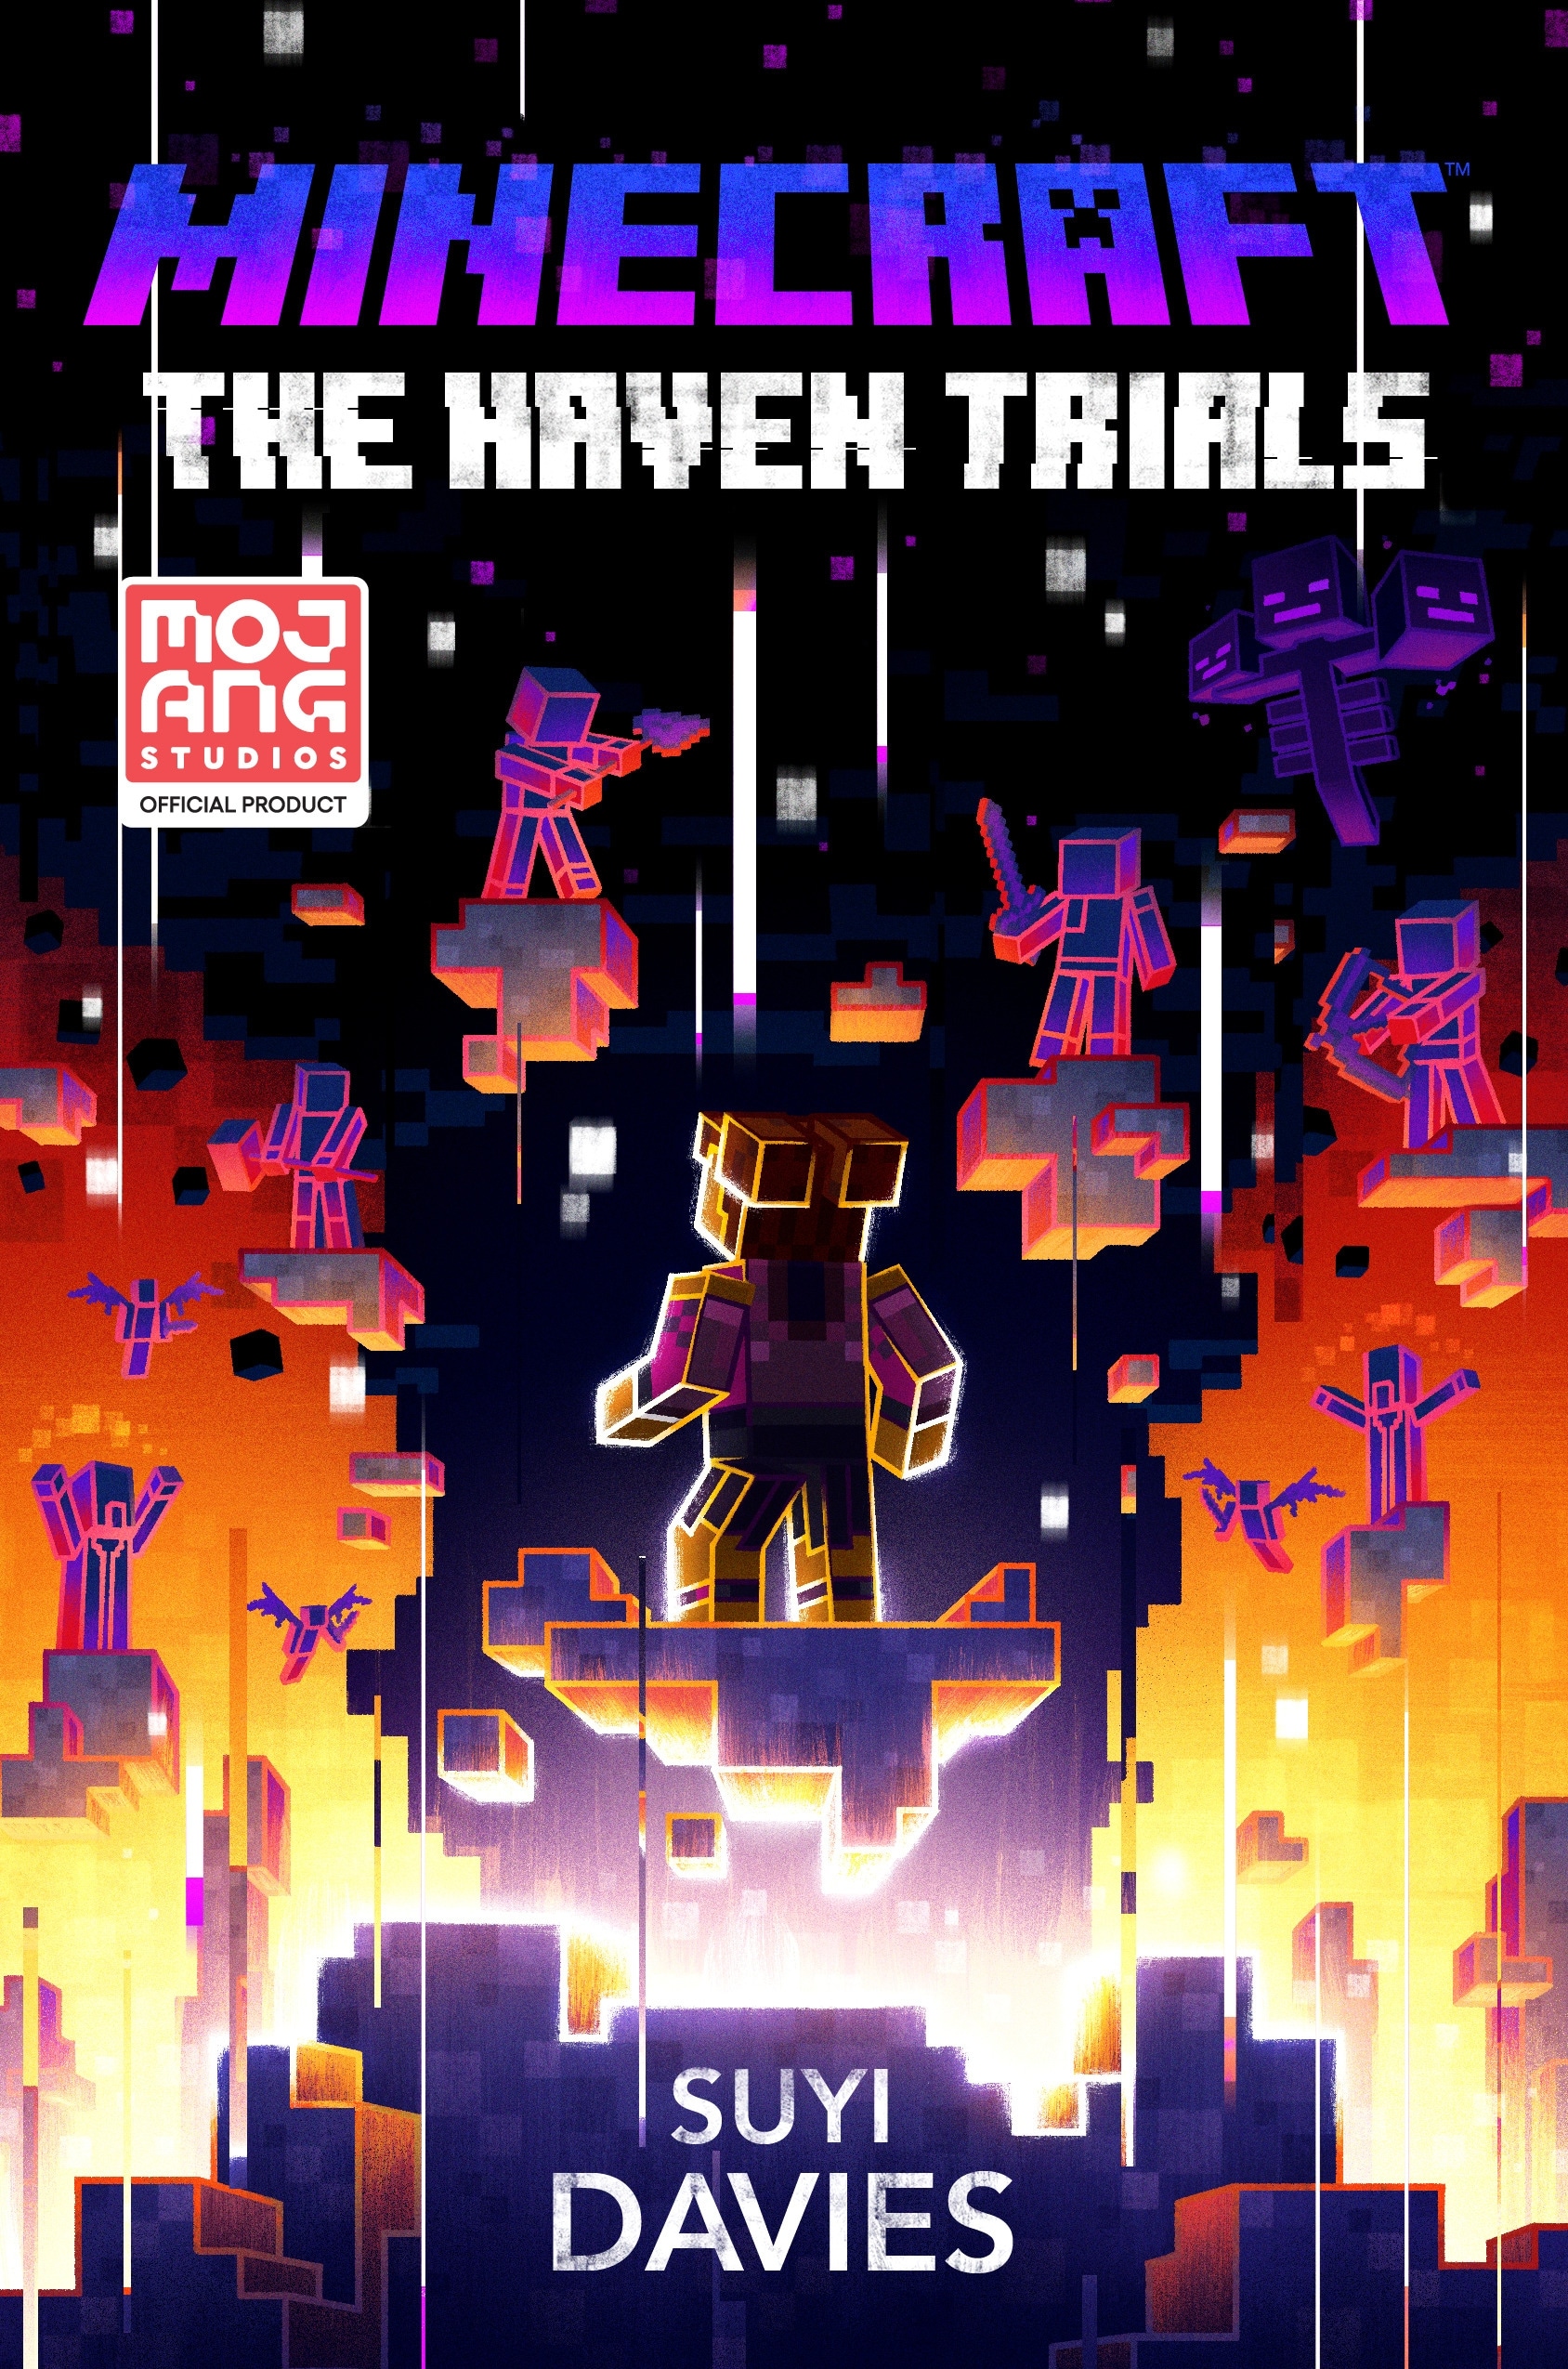 Book “Minecraft: The Haven Trials” by Suyi Davies Okungbowa — December 7, 2021